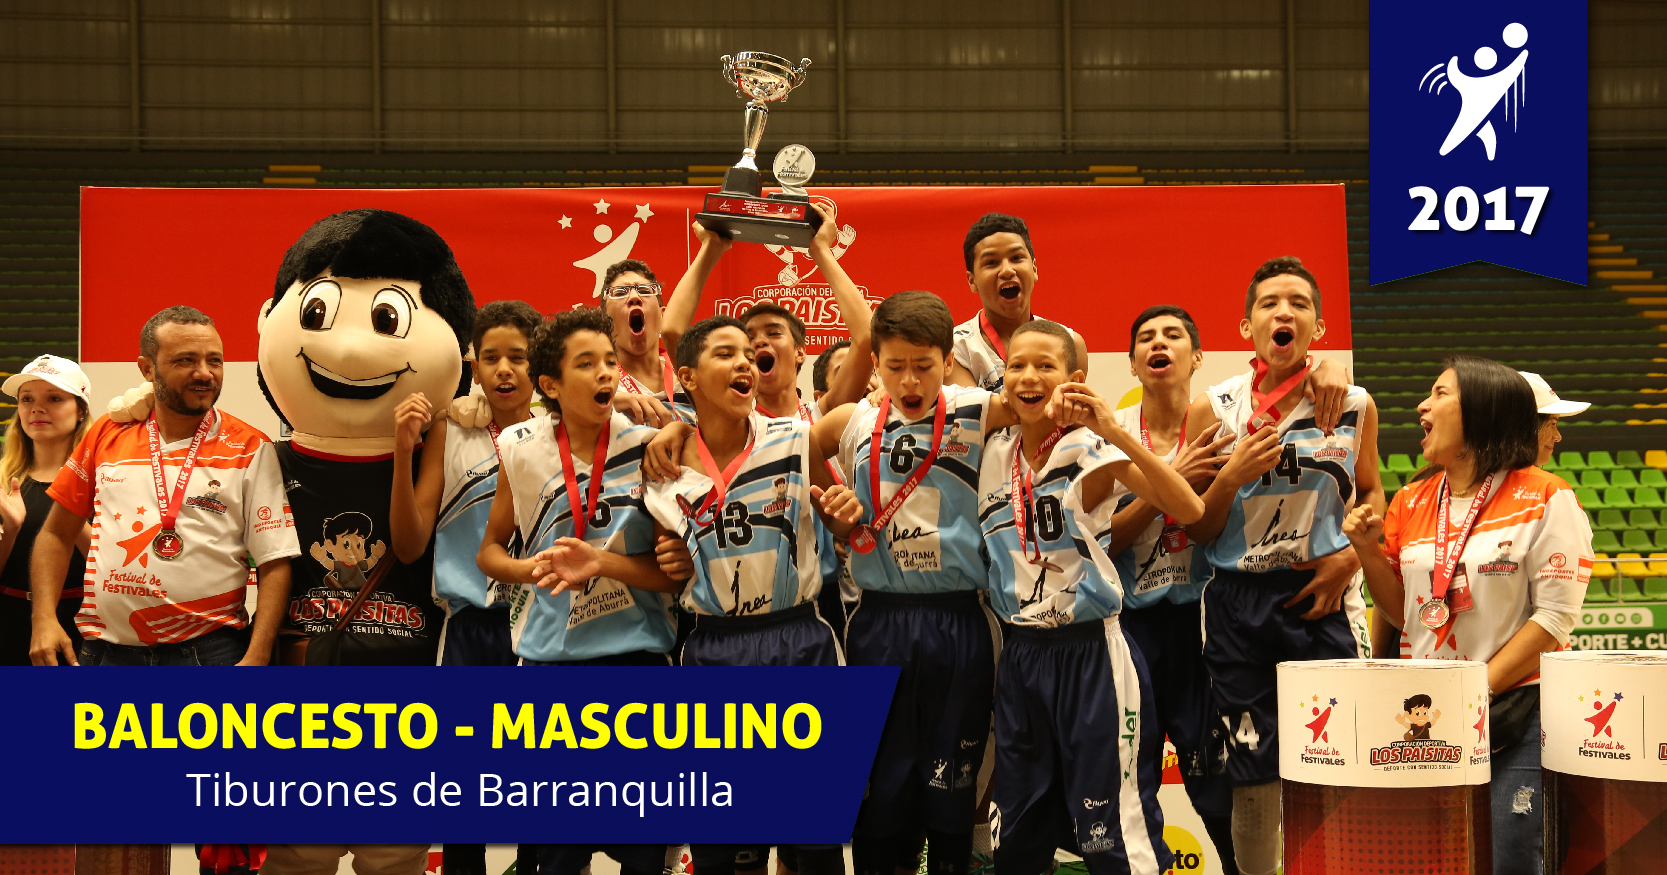 Baloncesto Masculino - Tiburones de Barranquilla